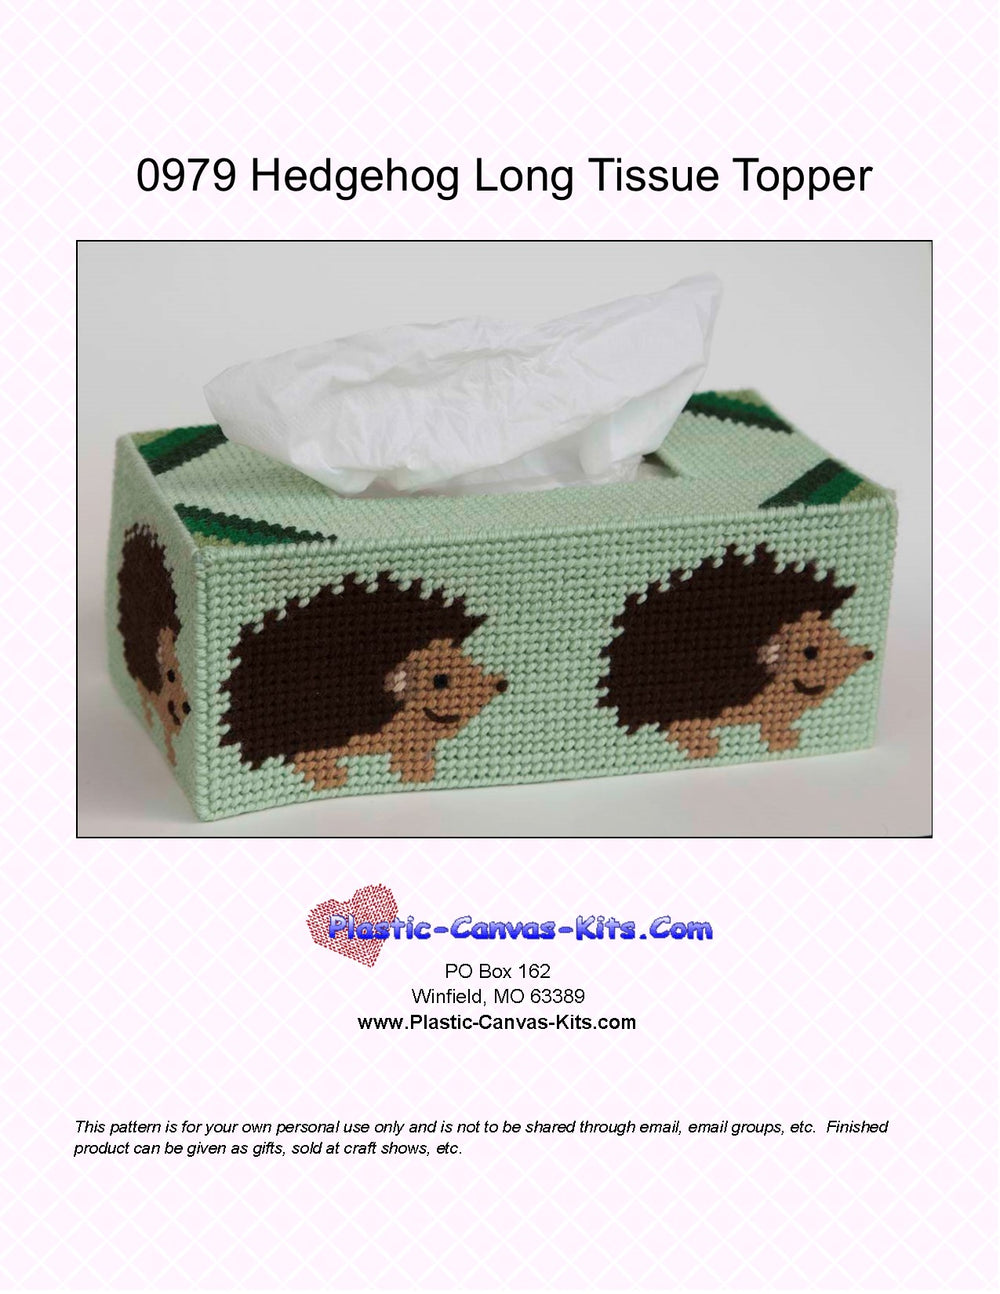 Hedgehog Long Tissue Topper